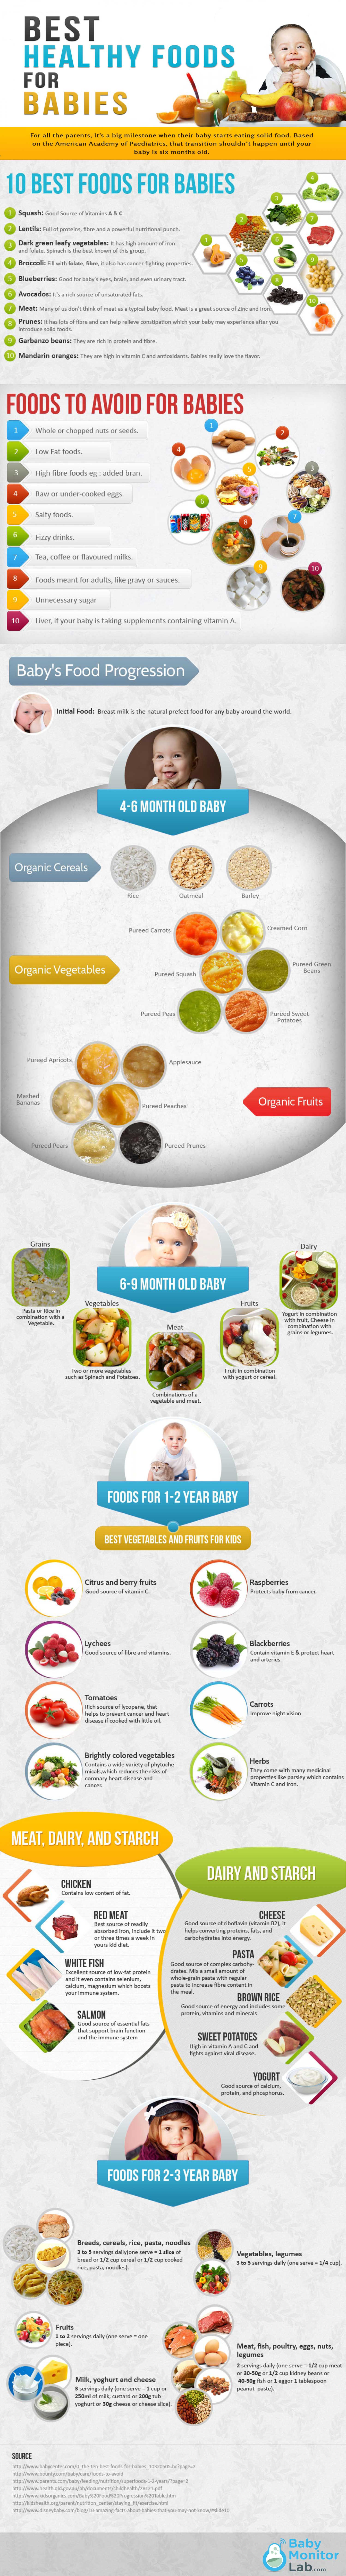 Best Healthy Foods for Babies